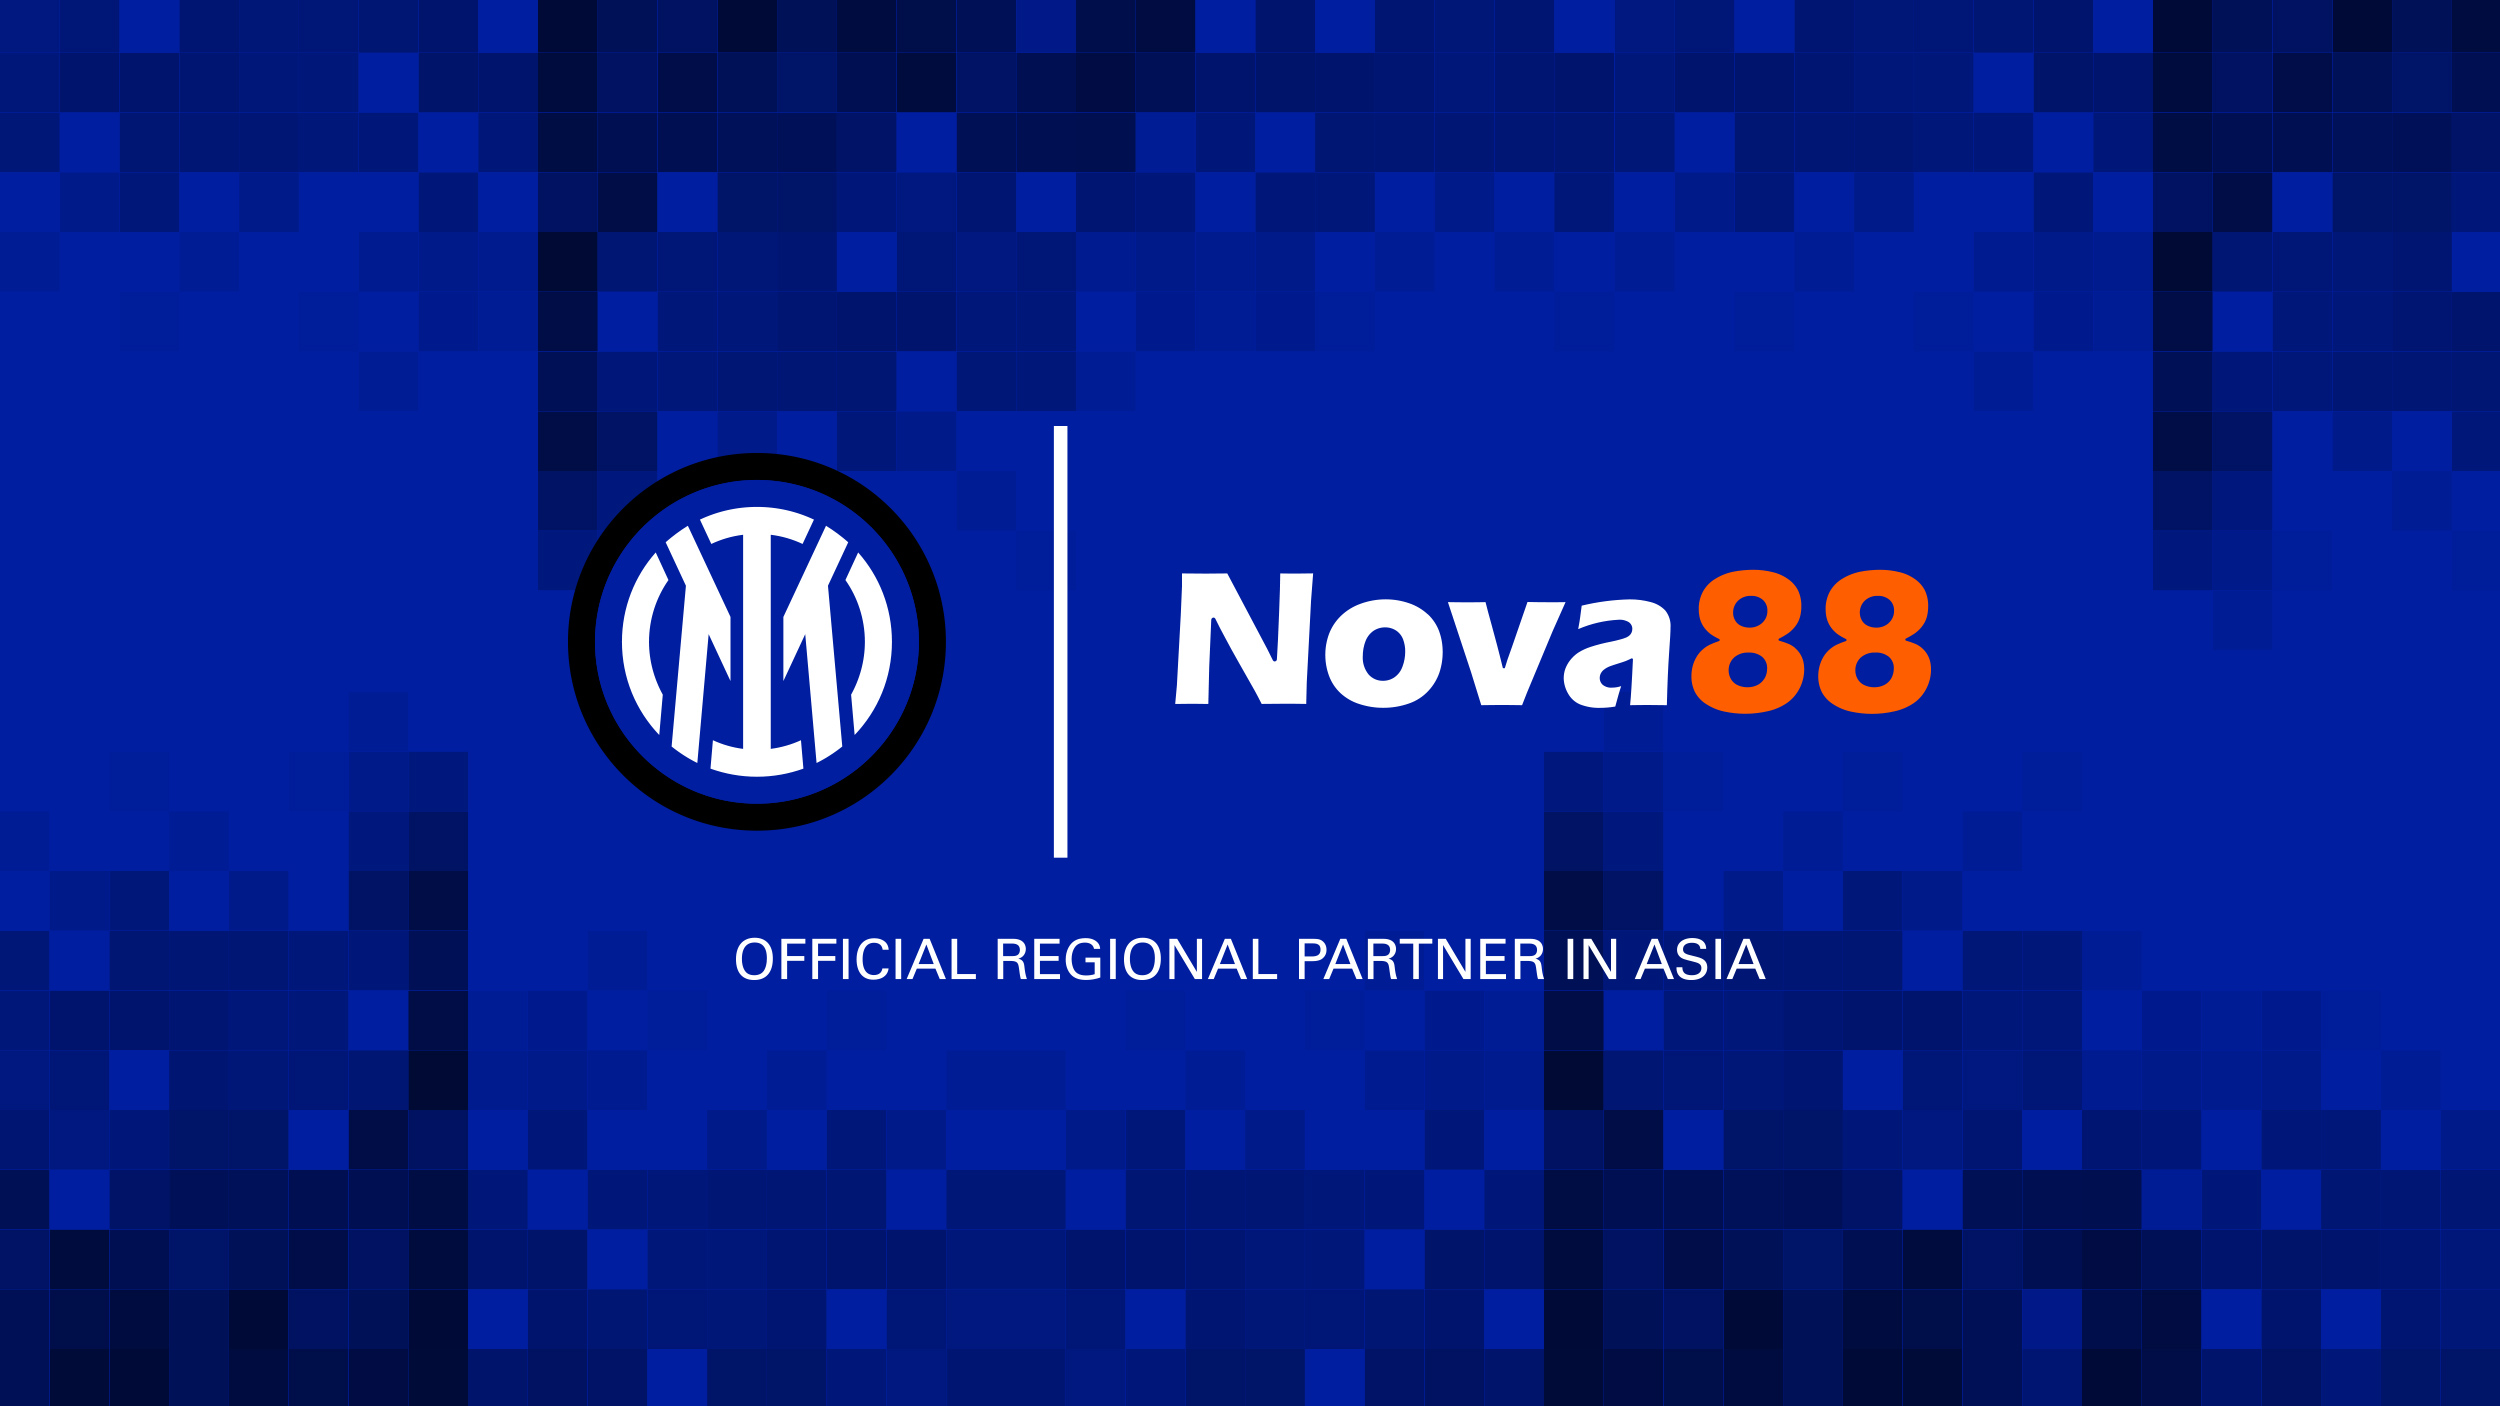 inter-signs-nova88-as-official-regional-partner-in-asia